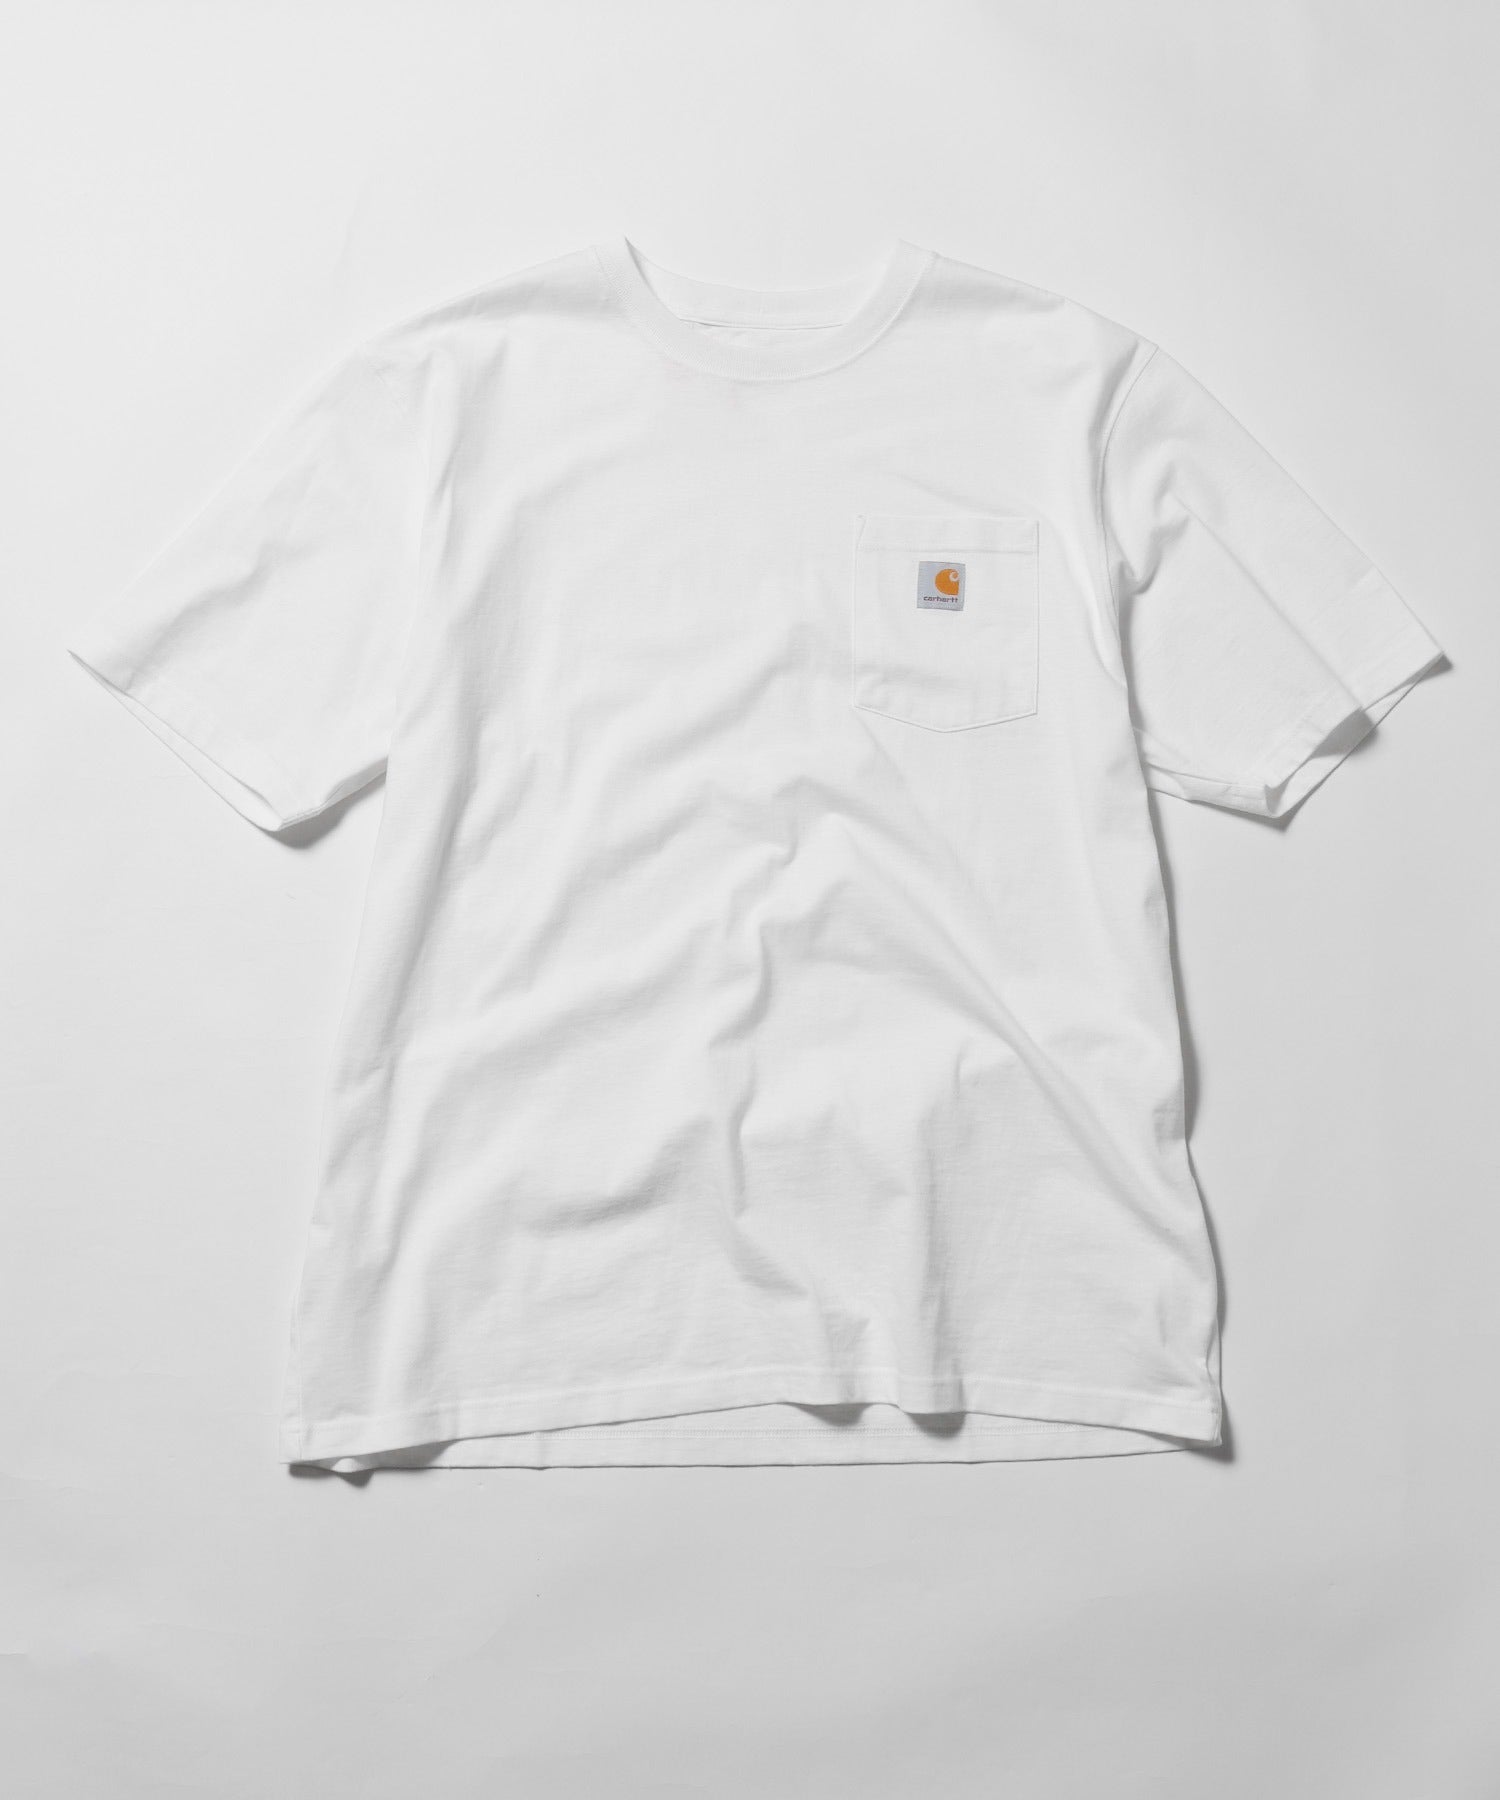 K87 Workwear Pocket T-Shirt